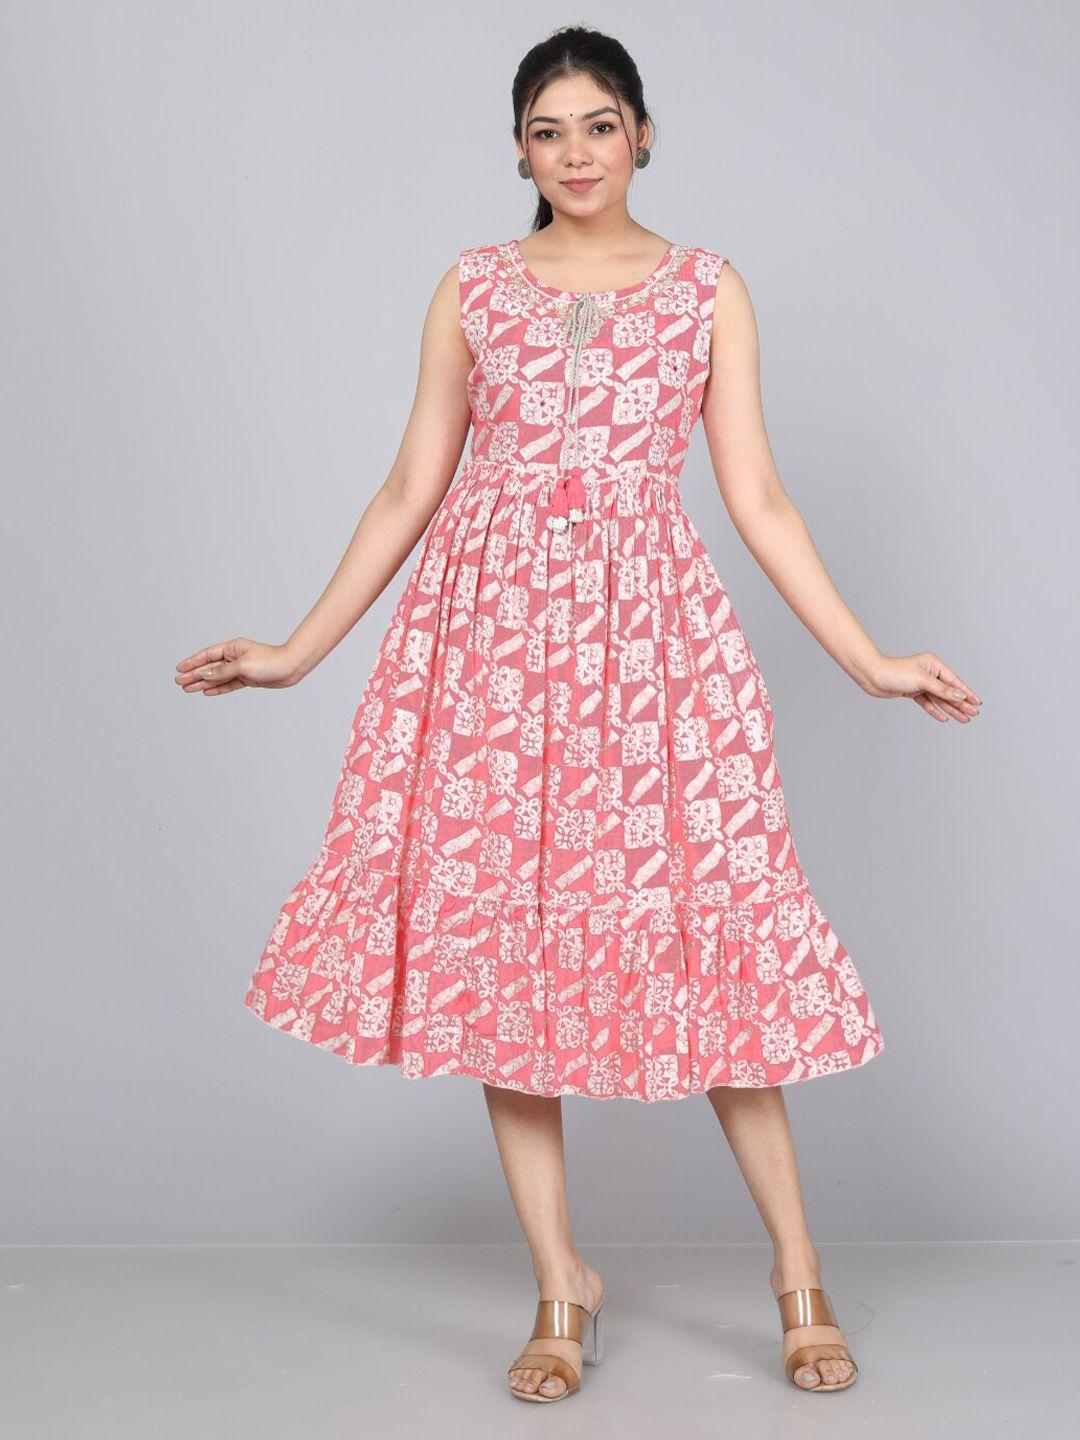 jc4u-floral-printed-fit-&-flare-dress